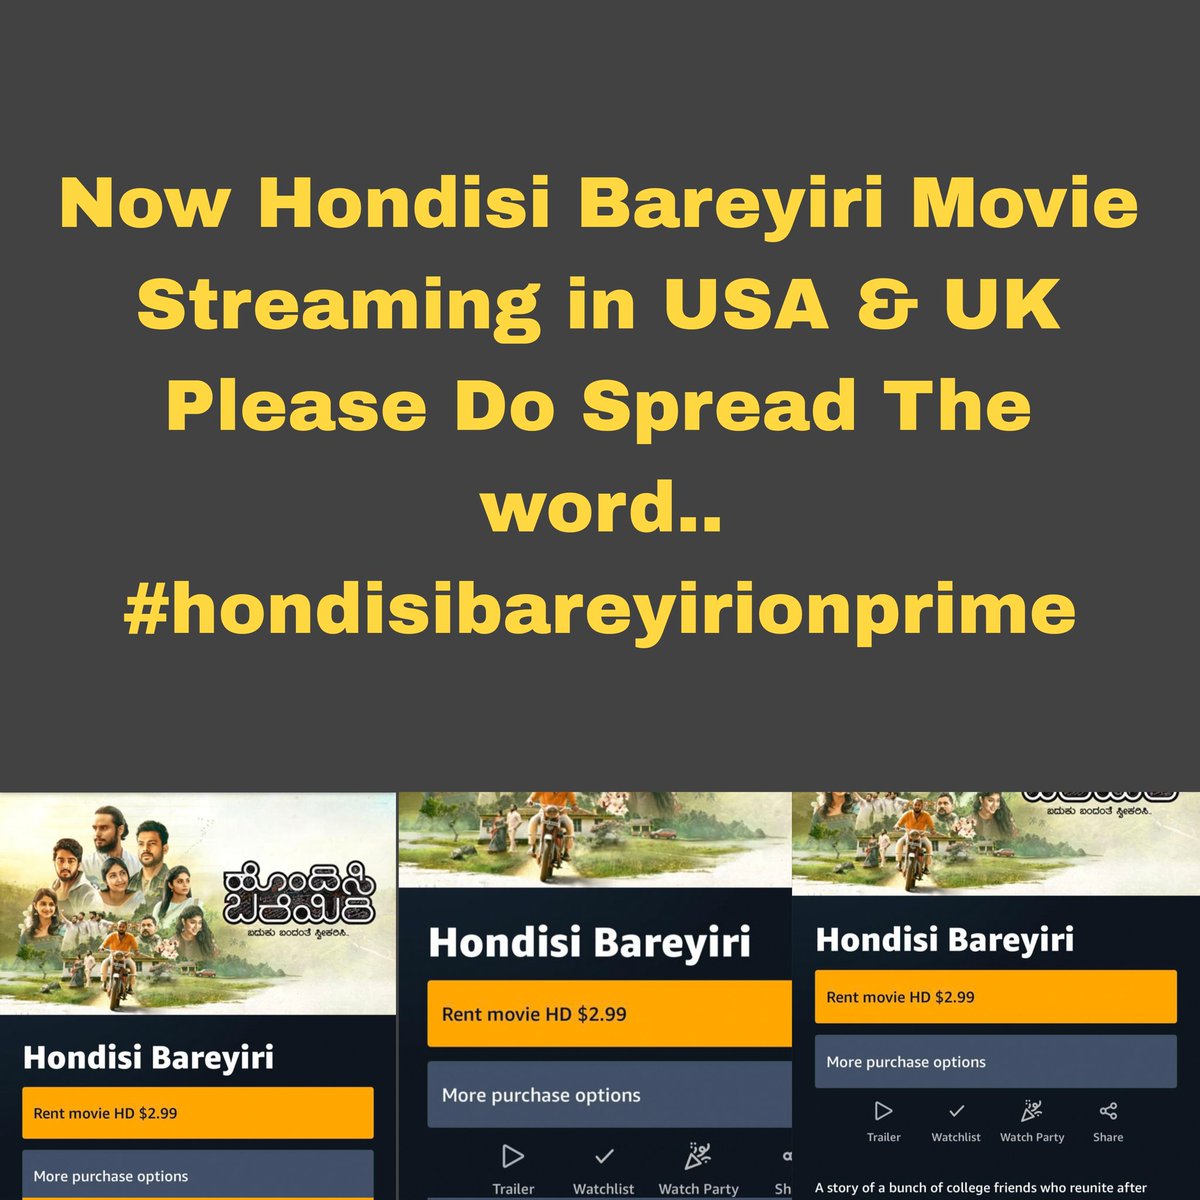 Now Hondisi Bareyiri Streaming in USA & UK Please Spread the word. #hondisibareyirionprime @praveentej03 @Nwinshankar @samyuktahornad @aishanishetty_ @Bhavanaaraao